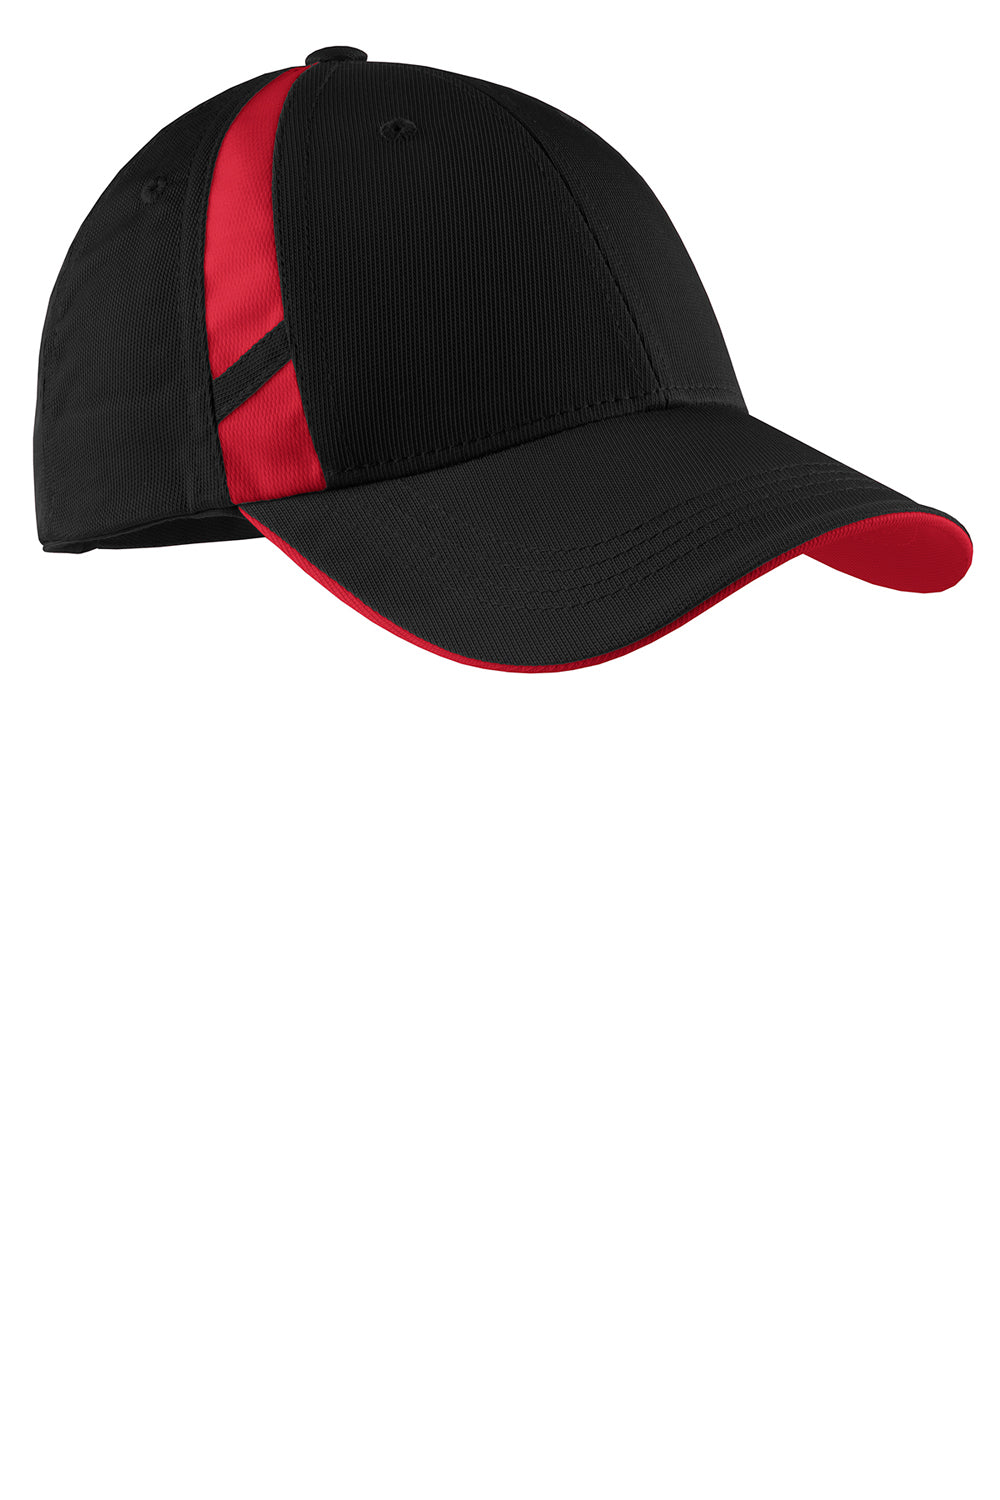 Sport-Tek STC12 Mens Dry Zone Moisture Wicking Adjustable Hat Black/Red Front